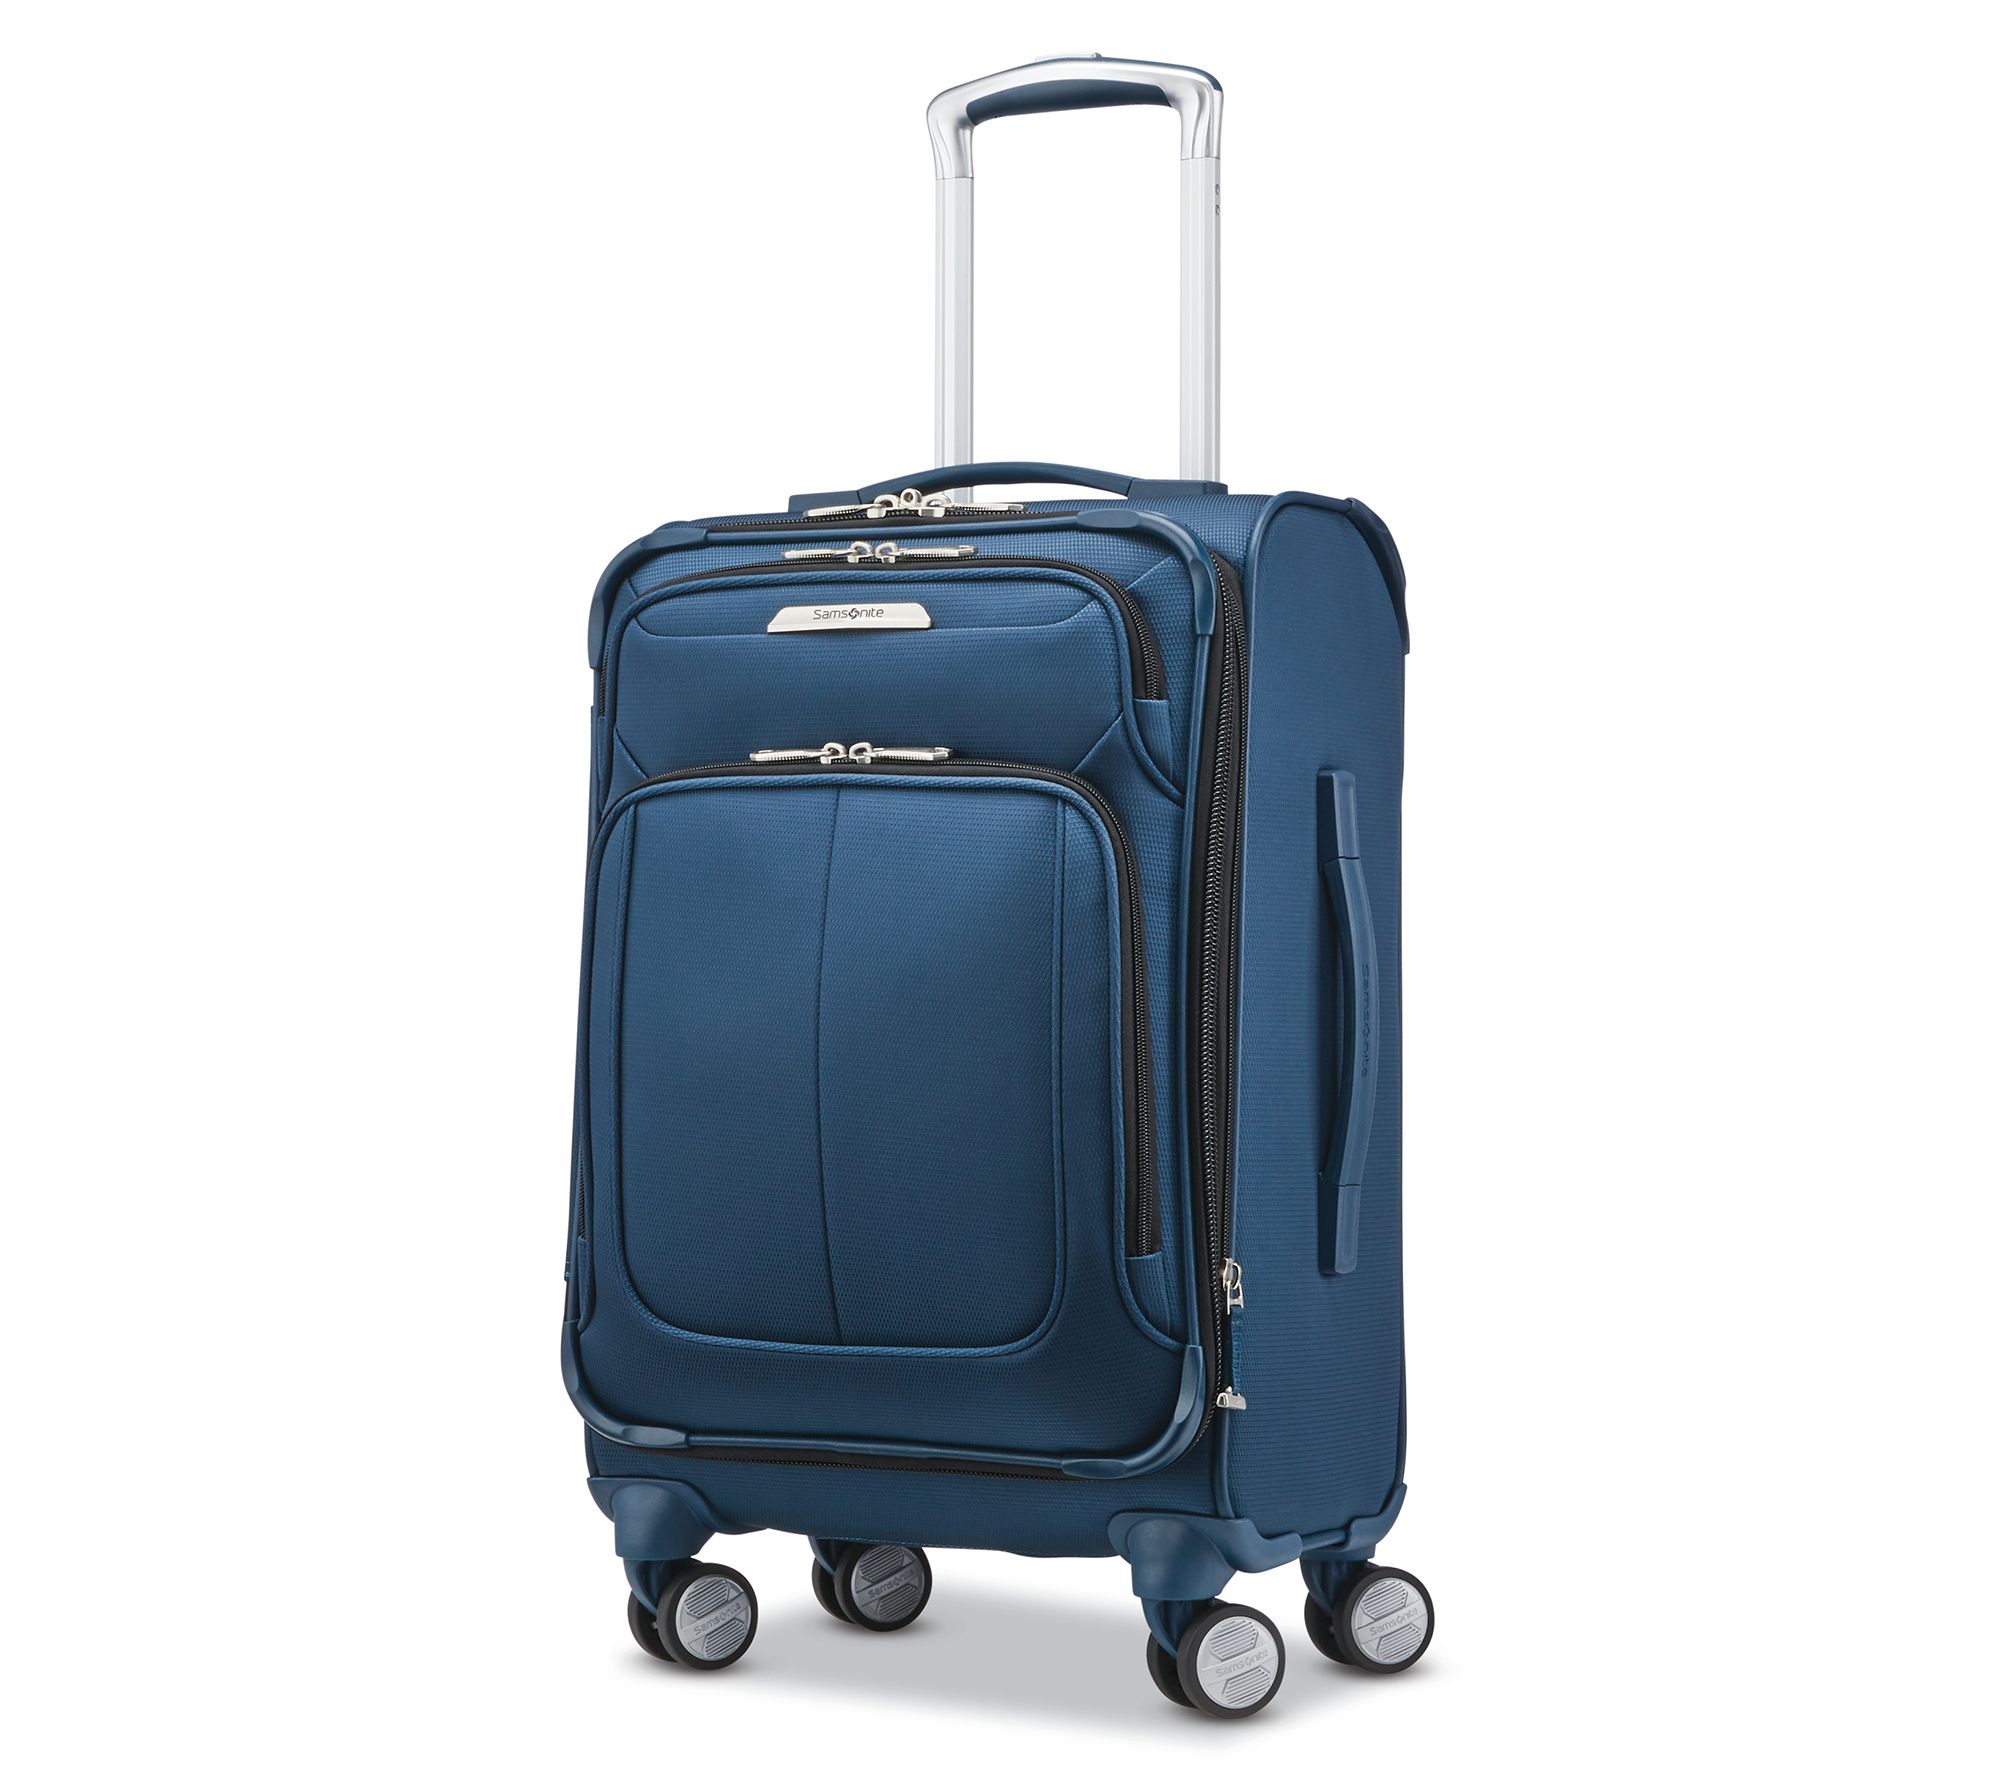 Samsonite Carry On Spinner Luggage - Solyte DLX - QVC.com